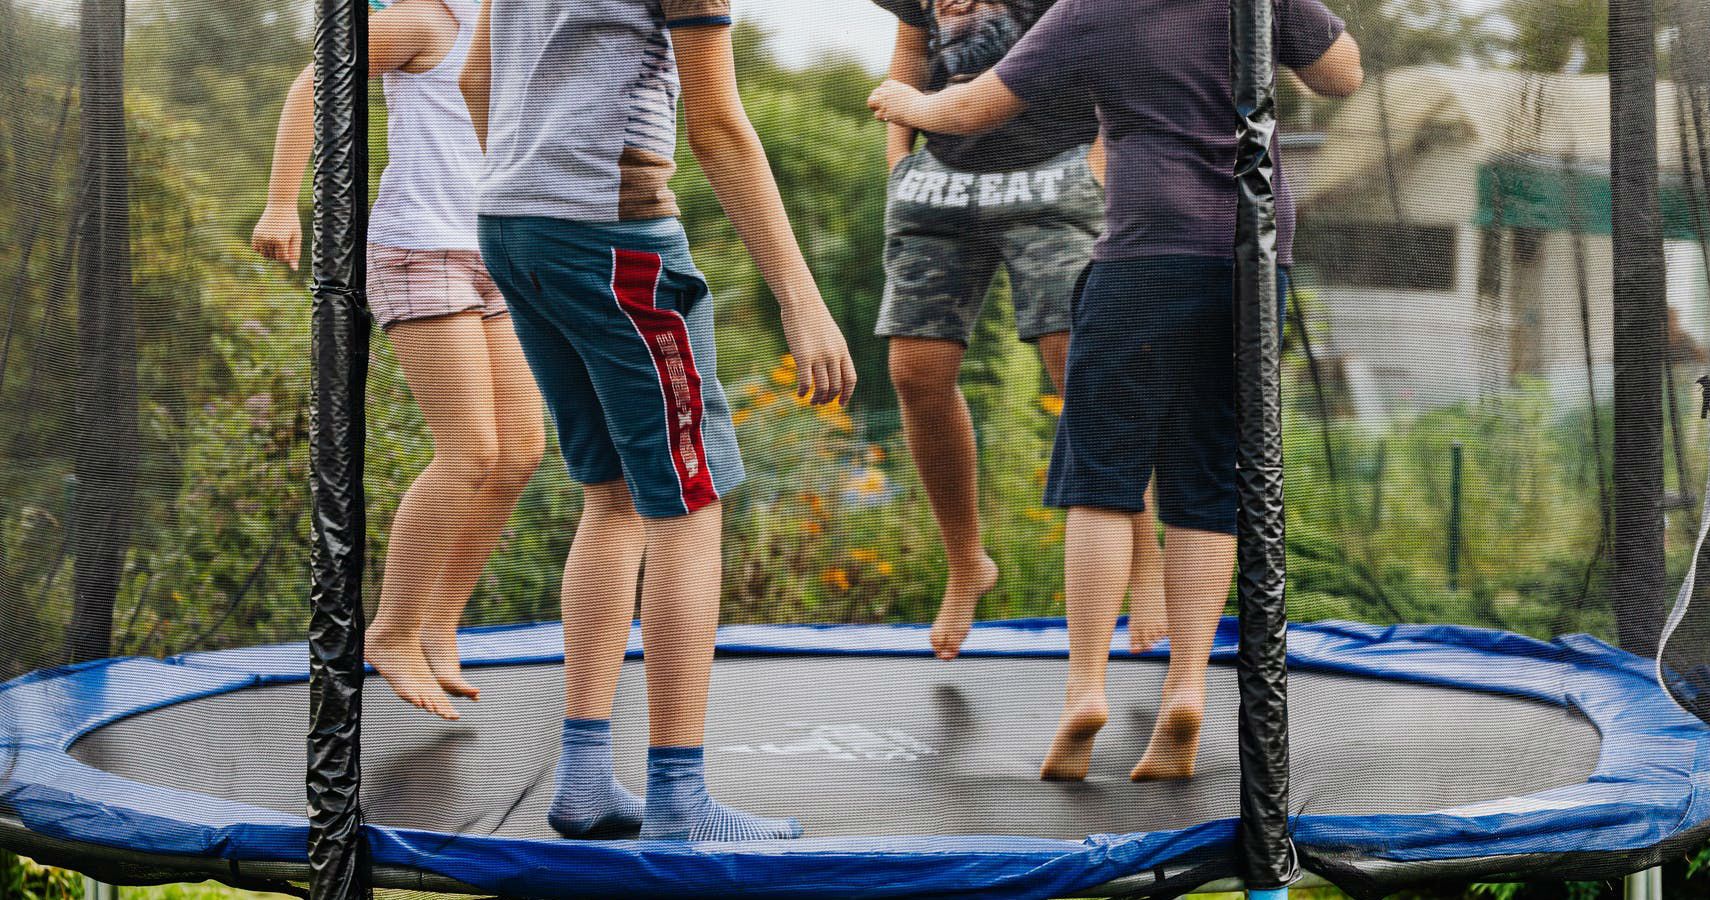 Kids jumping on trampoline